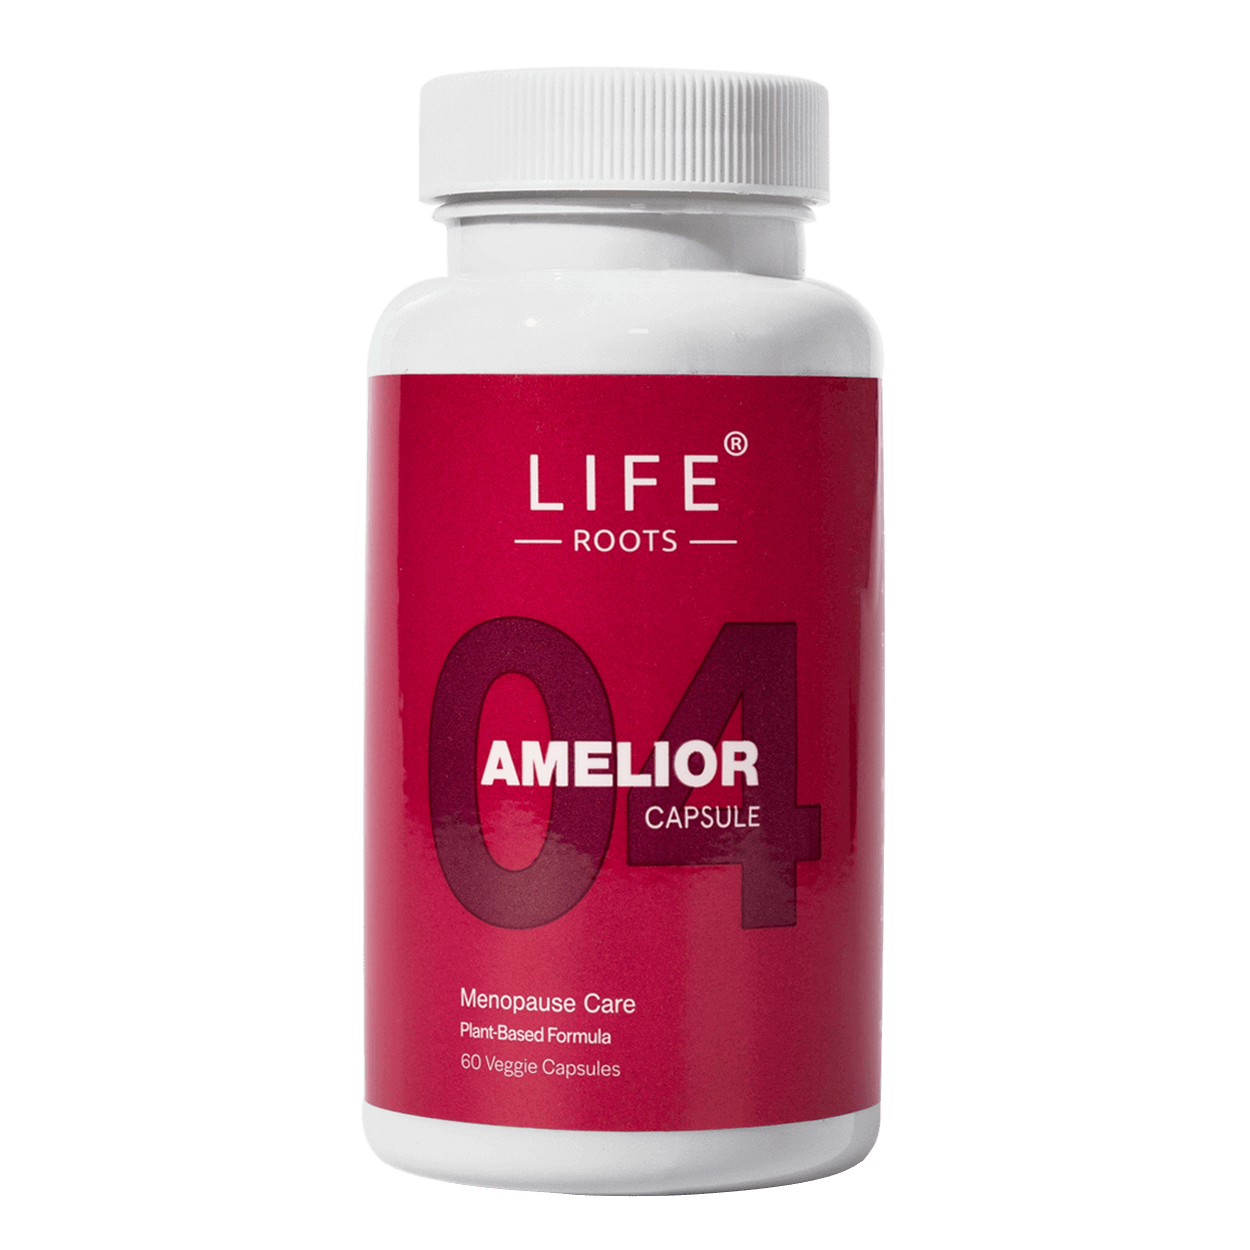 Amelior - Bottle | LIFE ROOTS